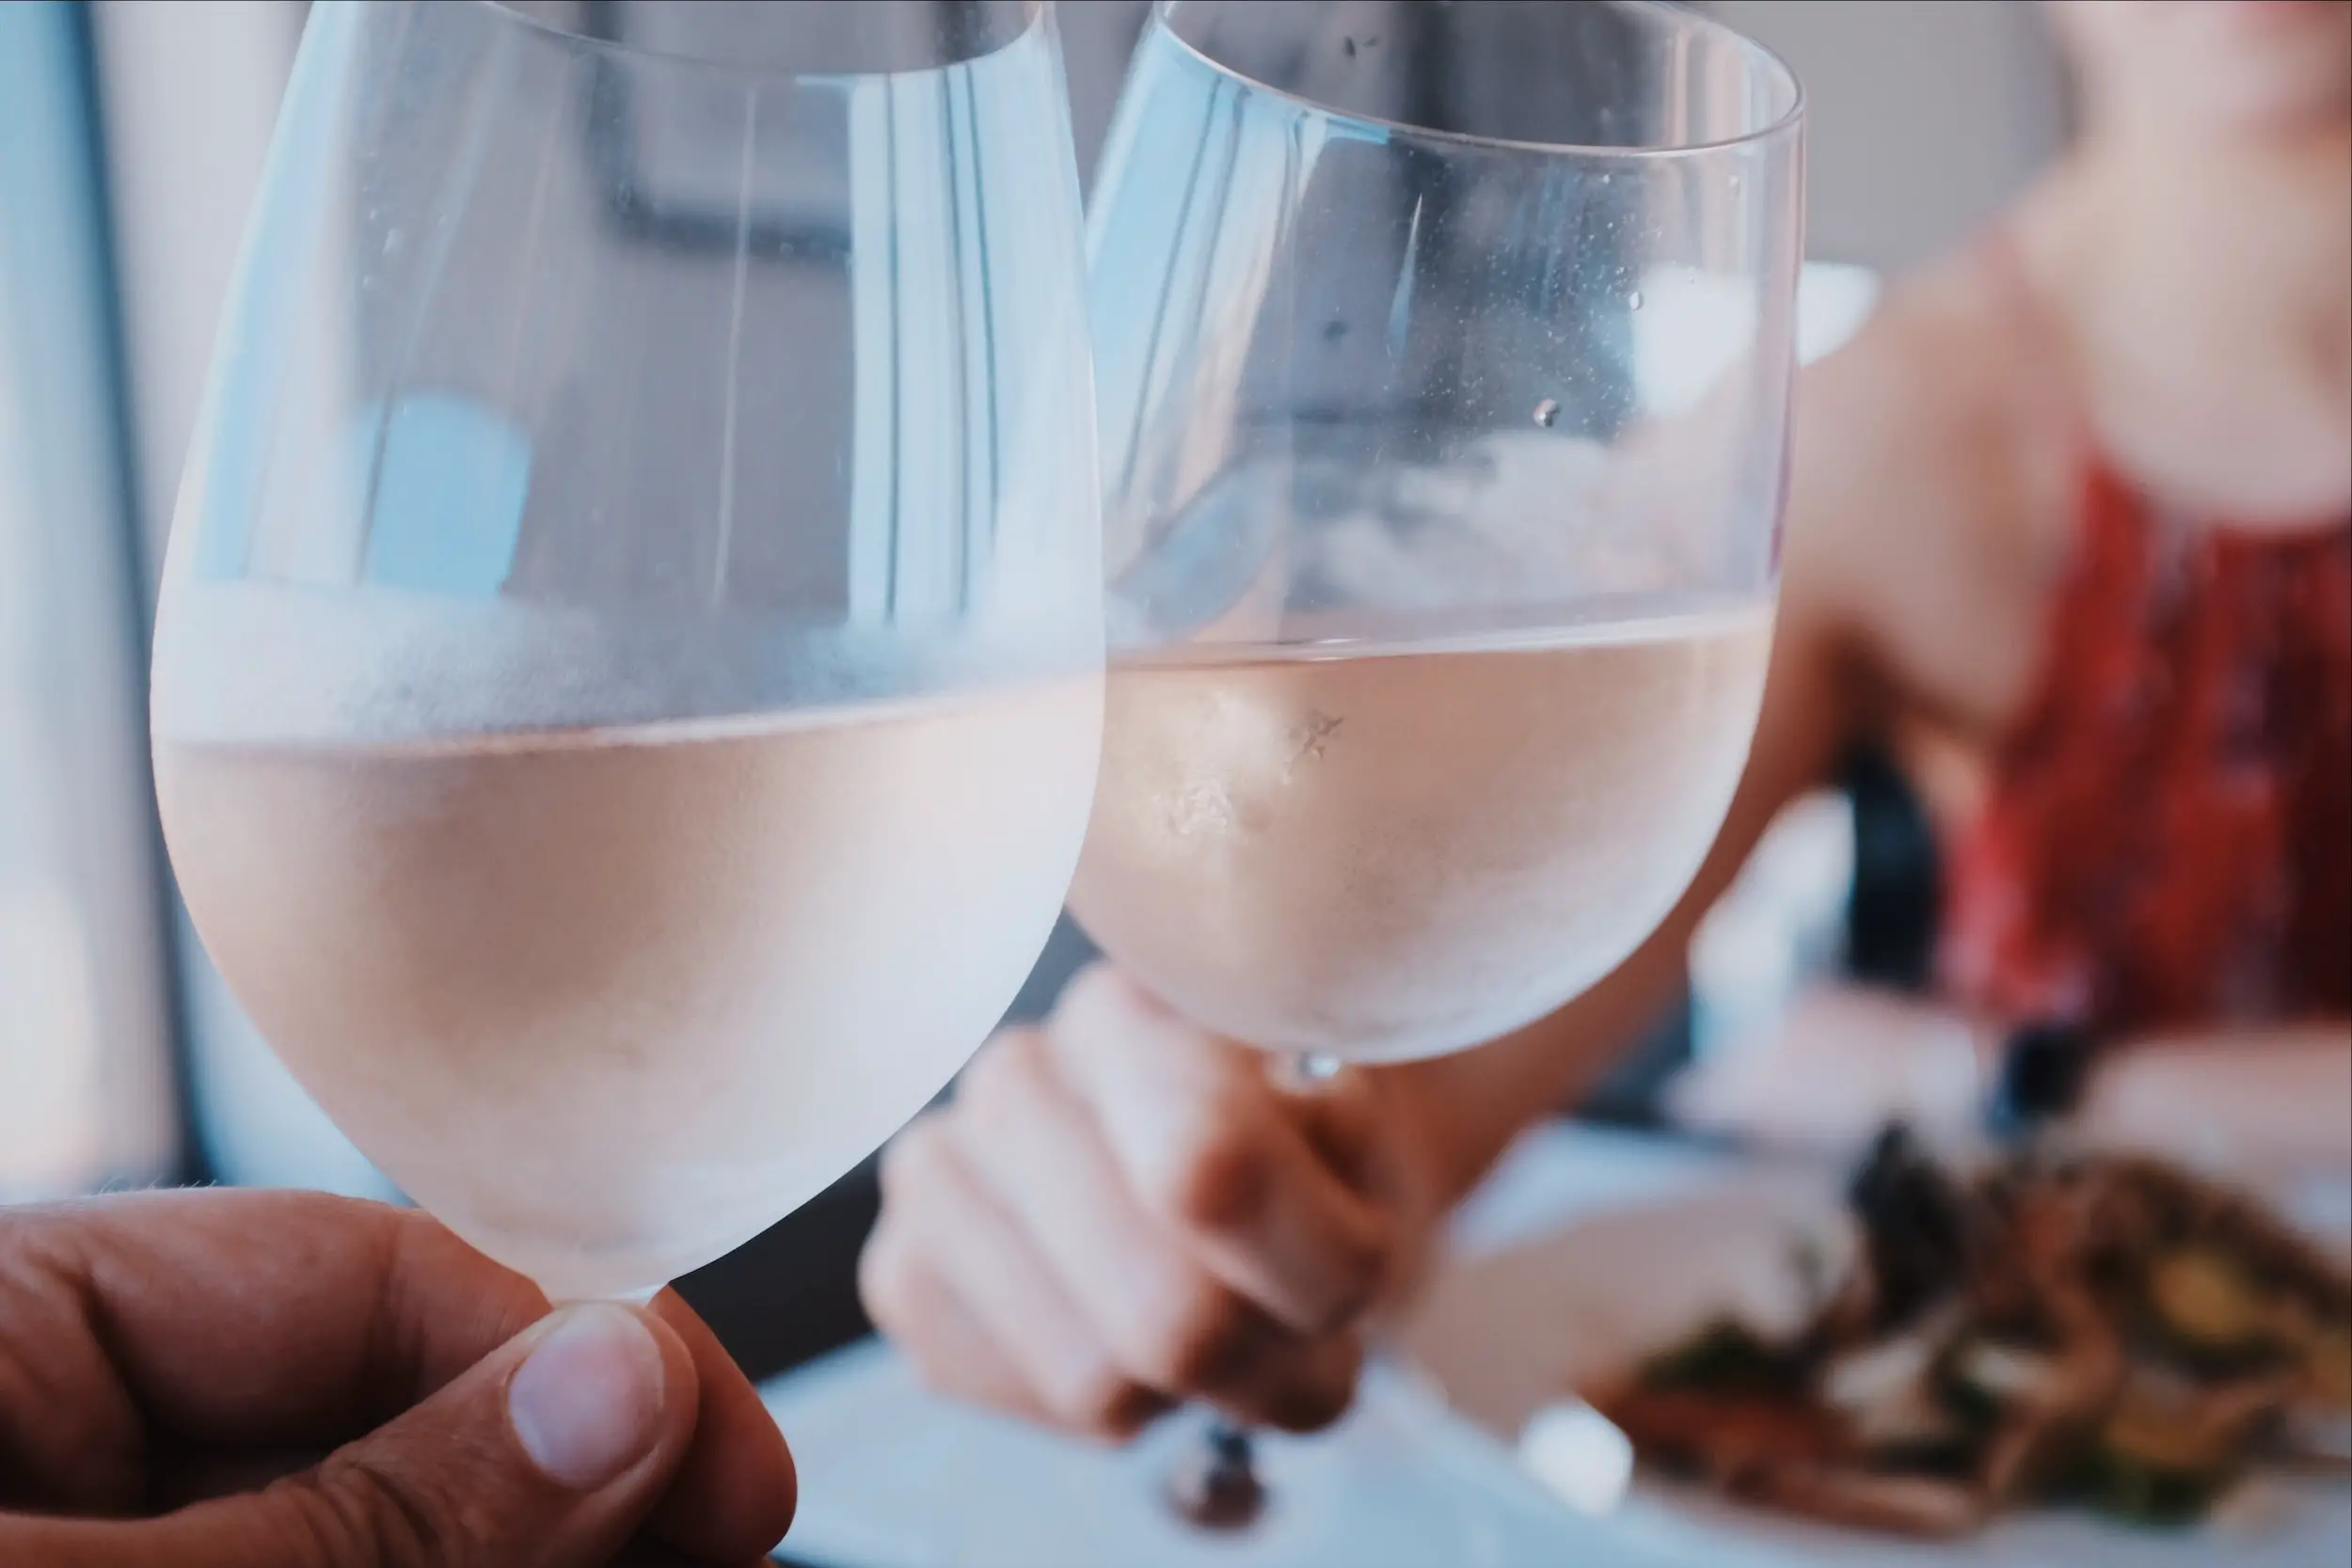 rose wine glasses - how to save money wine tasting